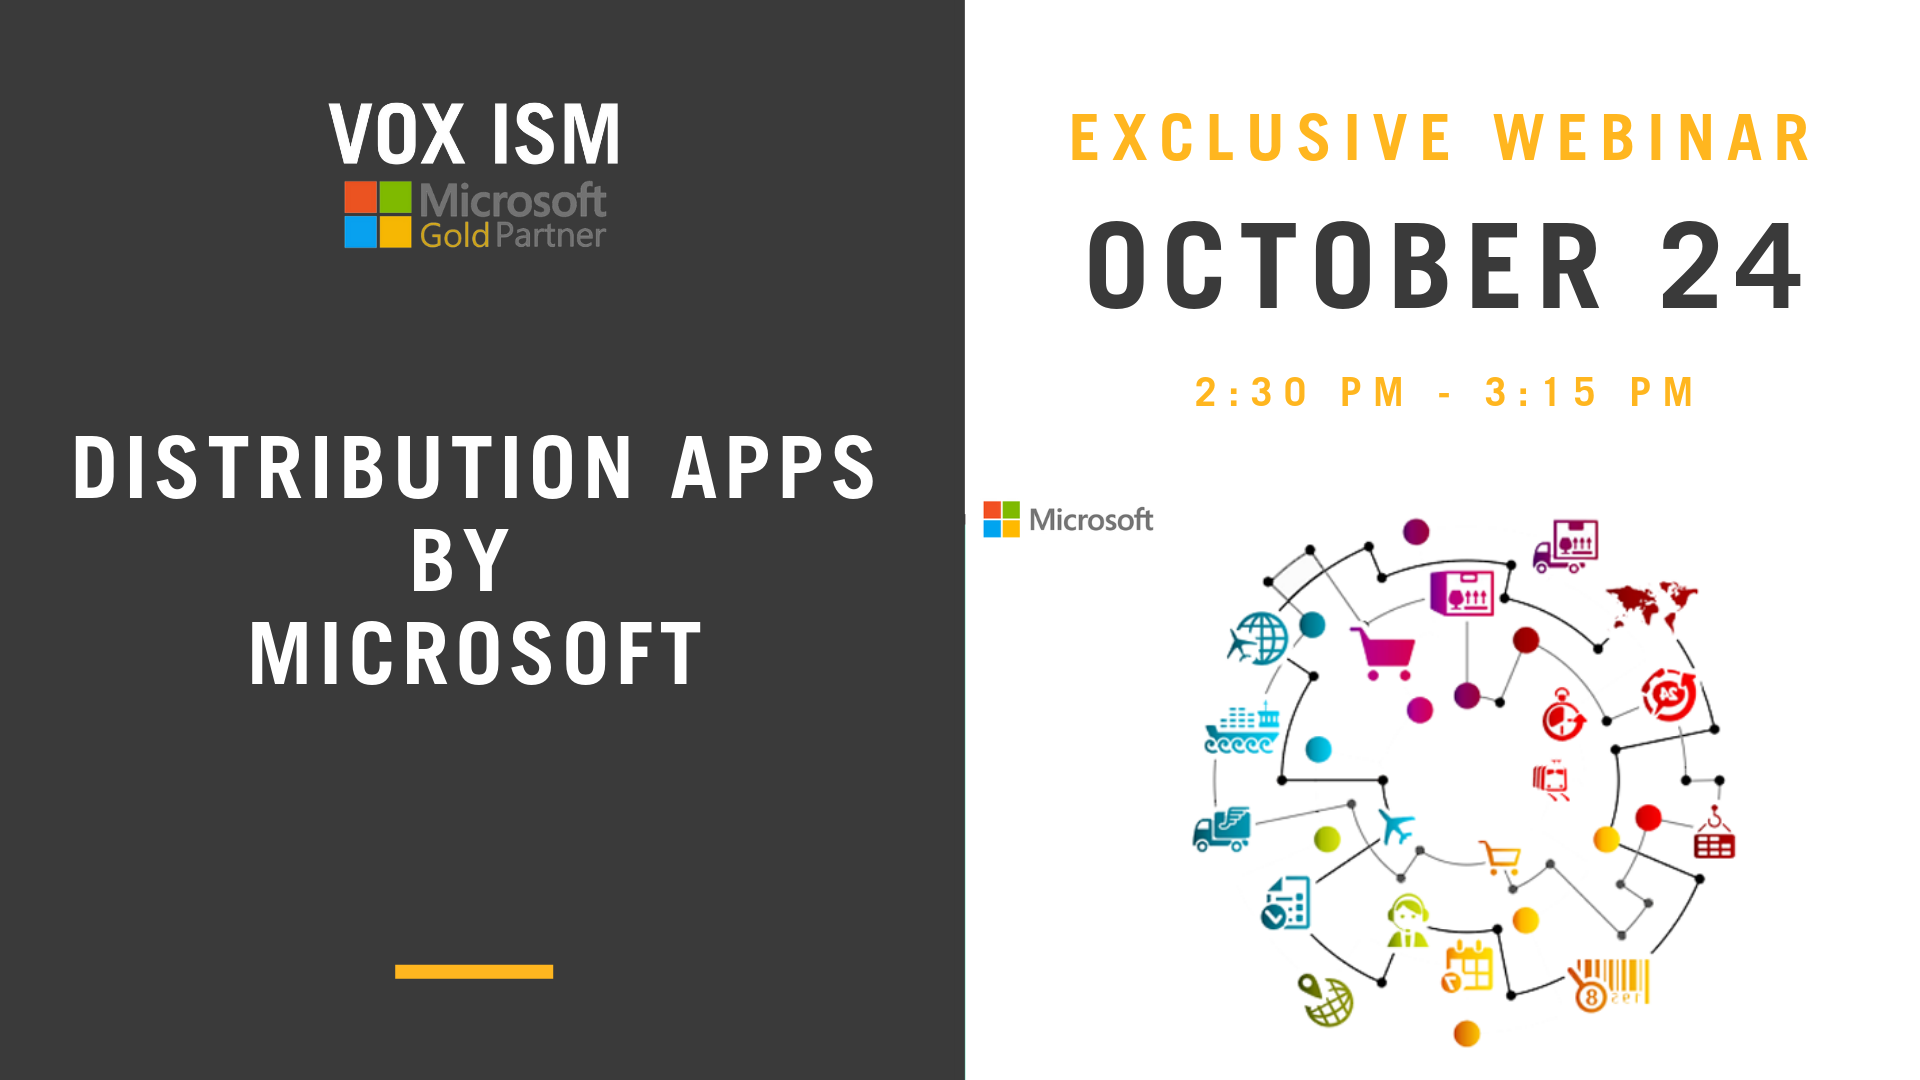 Distribution Apps by Microsoft - October 24 - Webinar - VOX ISM